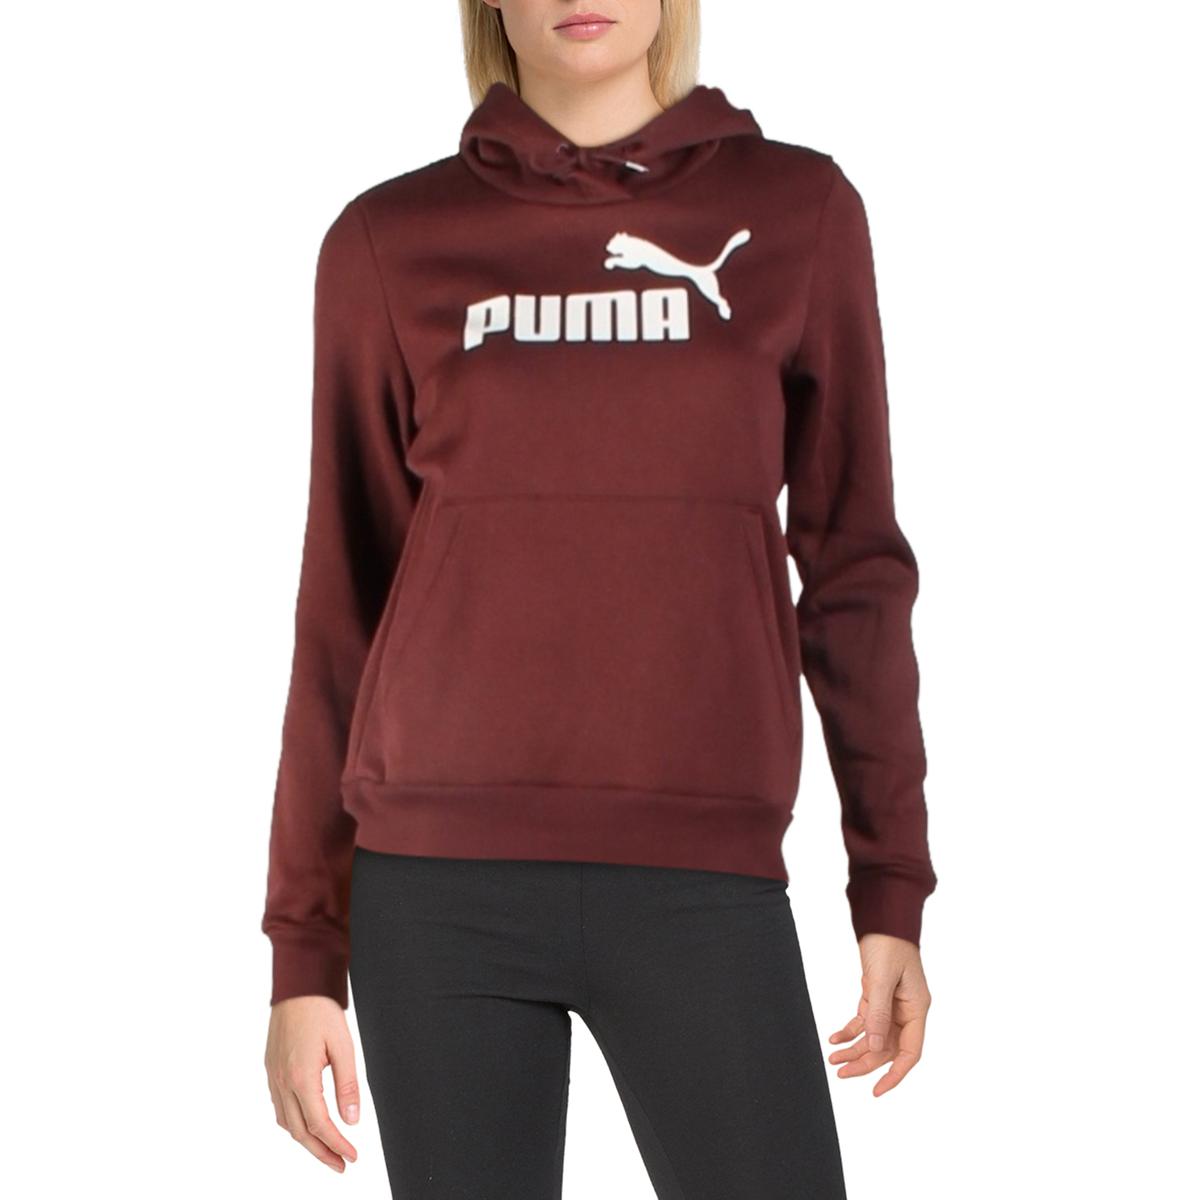 Puma Womens Red Sweatshirt Fitness Running Hoodie Athletic M BHFO 1445 ...